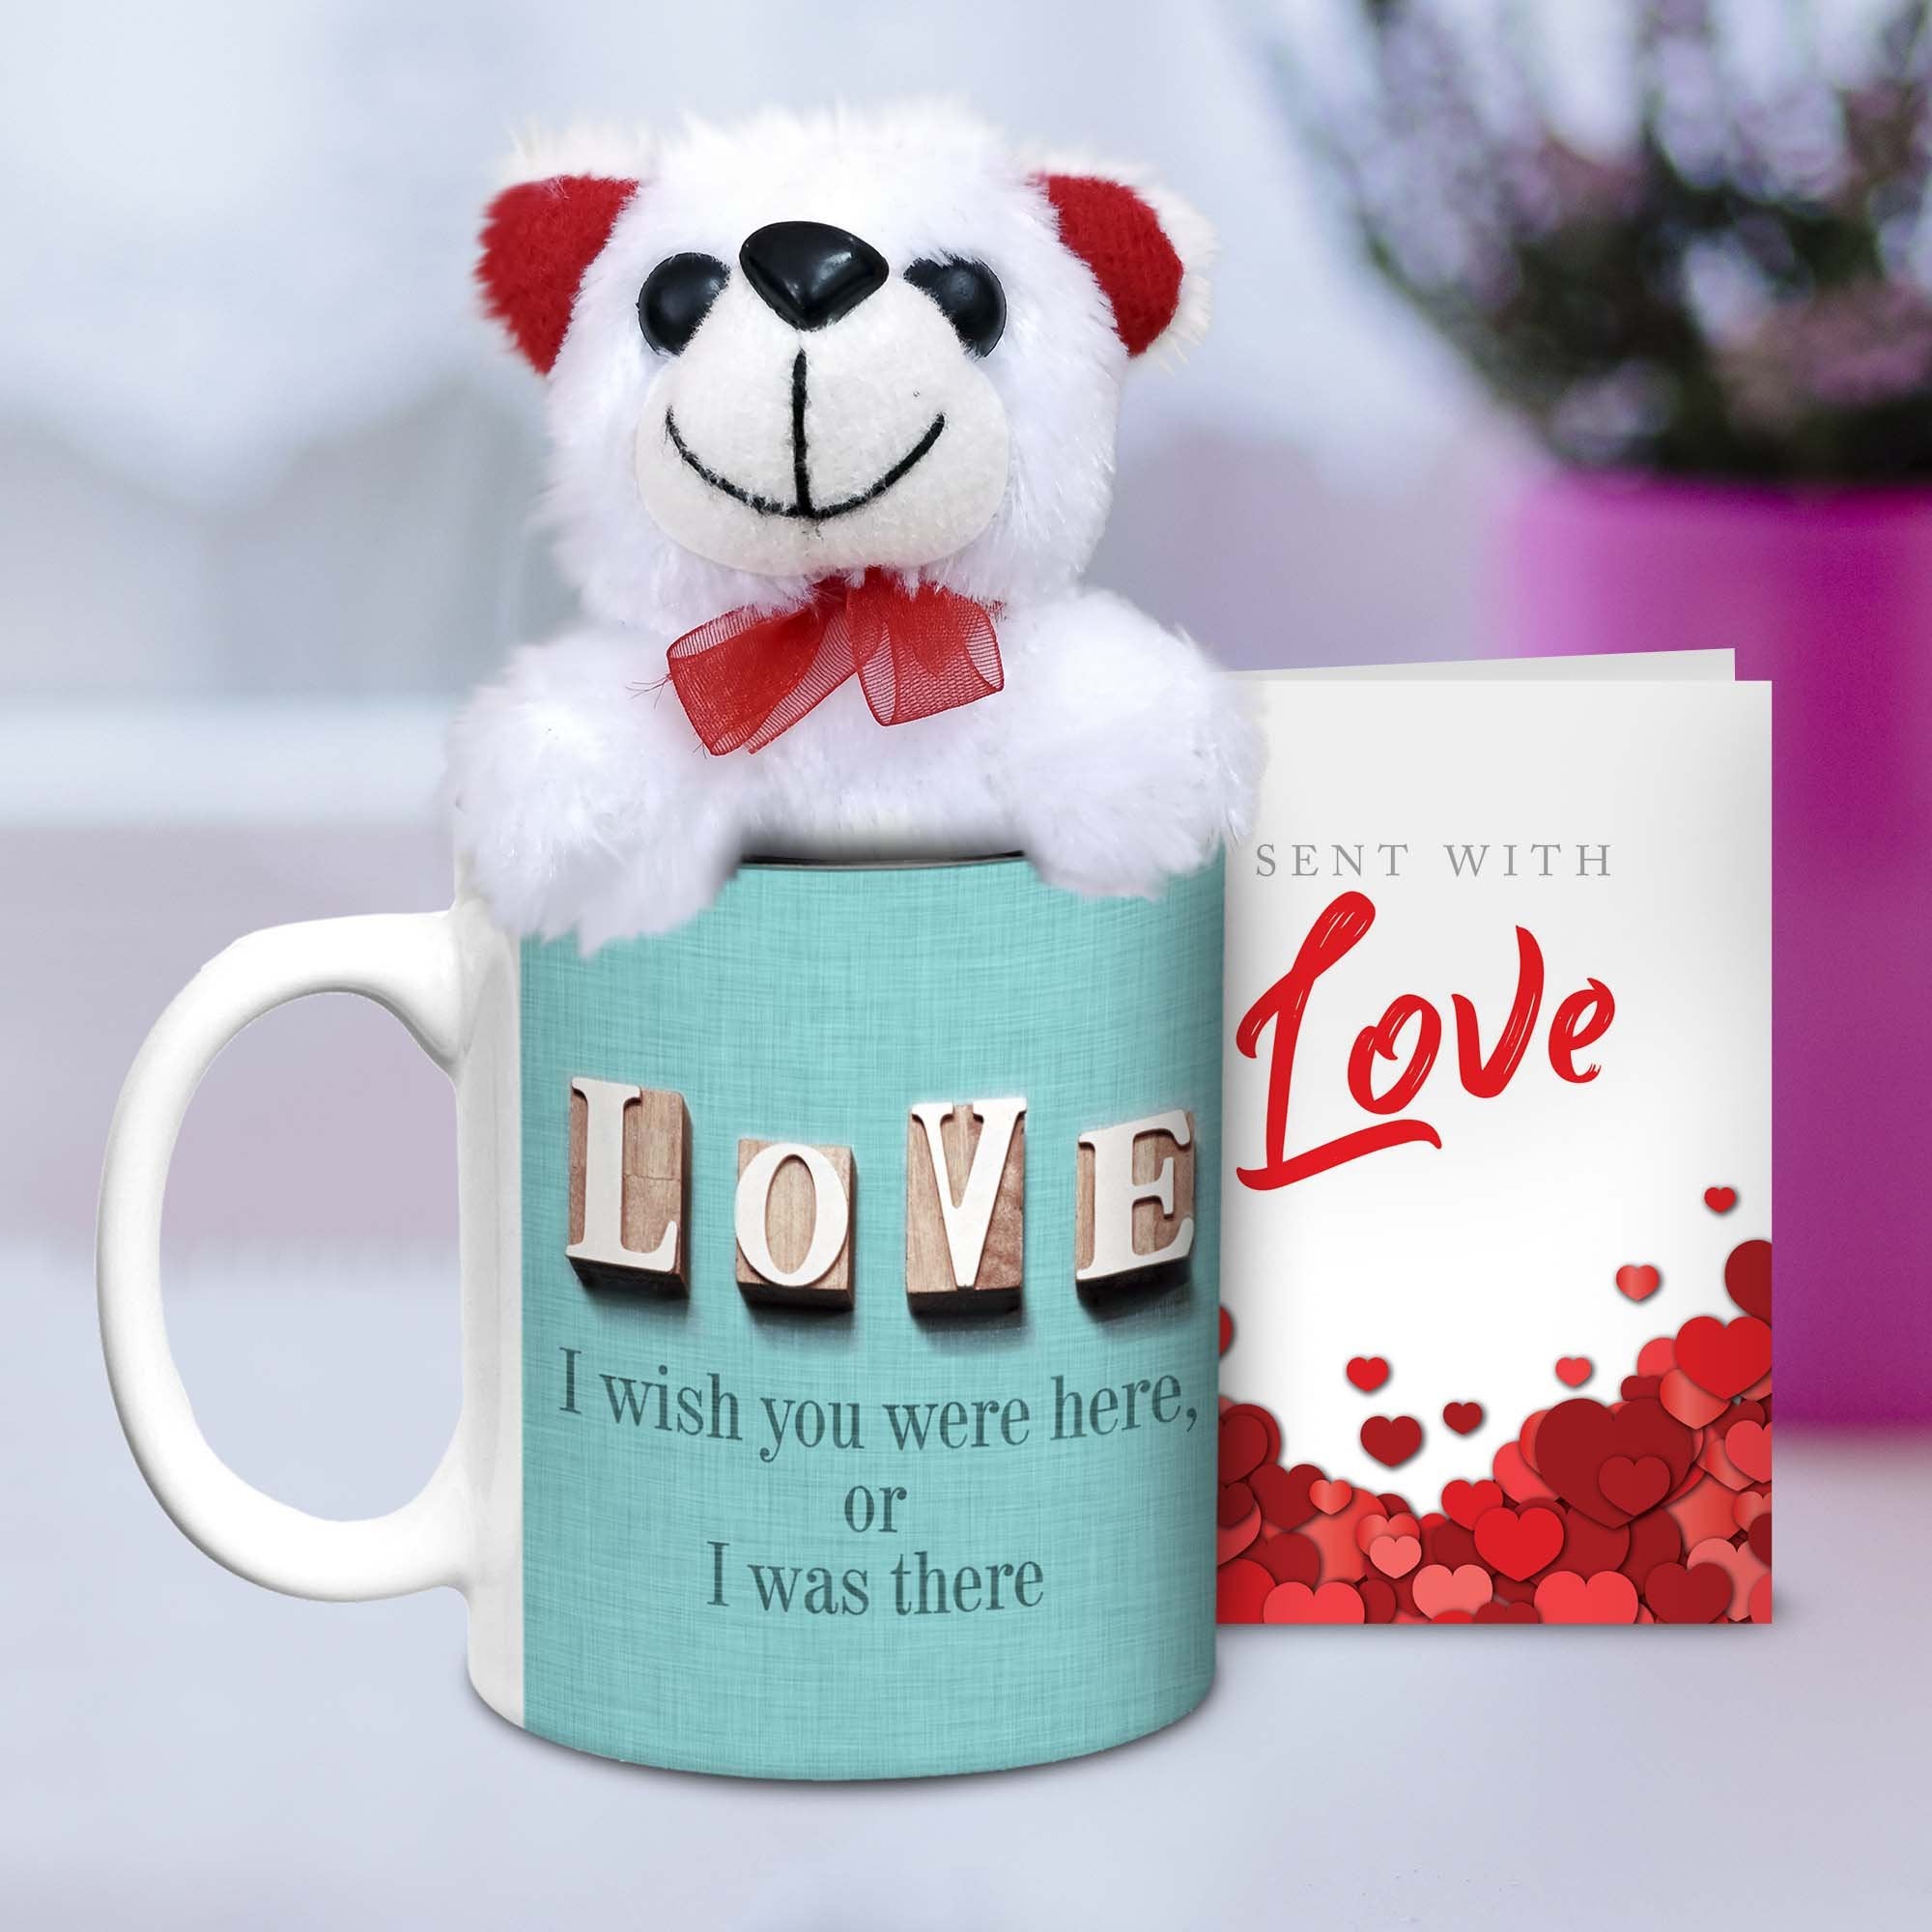 love-blocks-mug-with-teddy-card